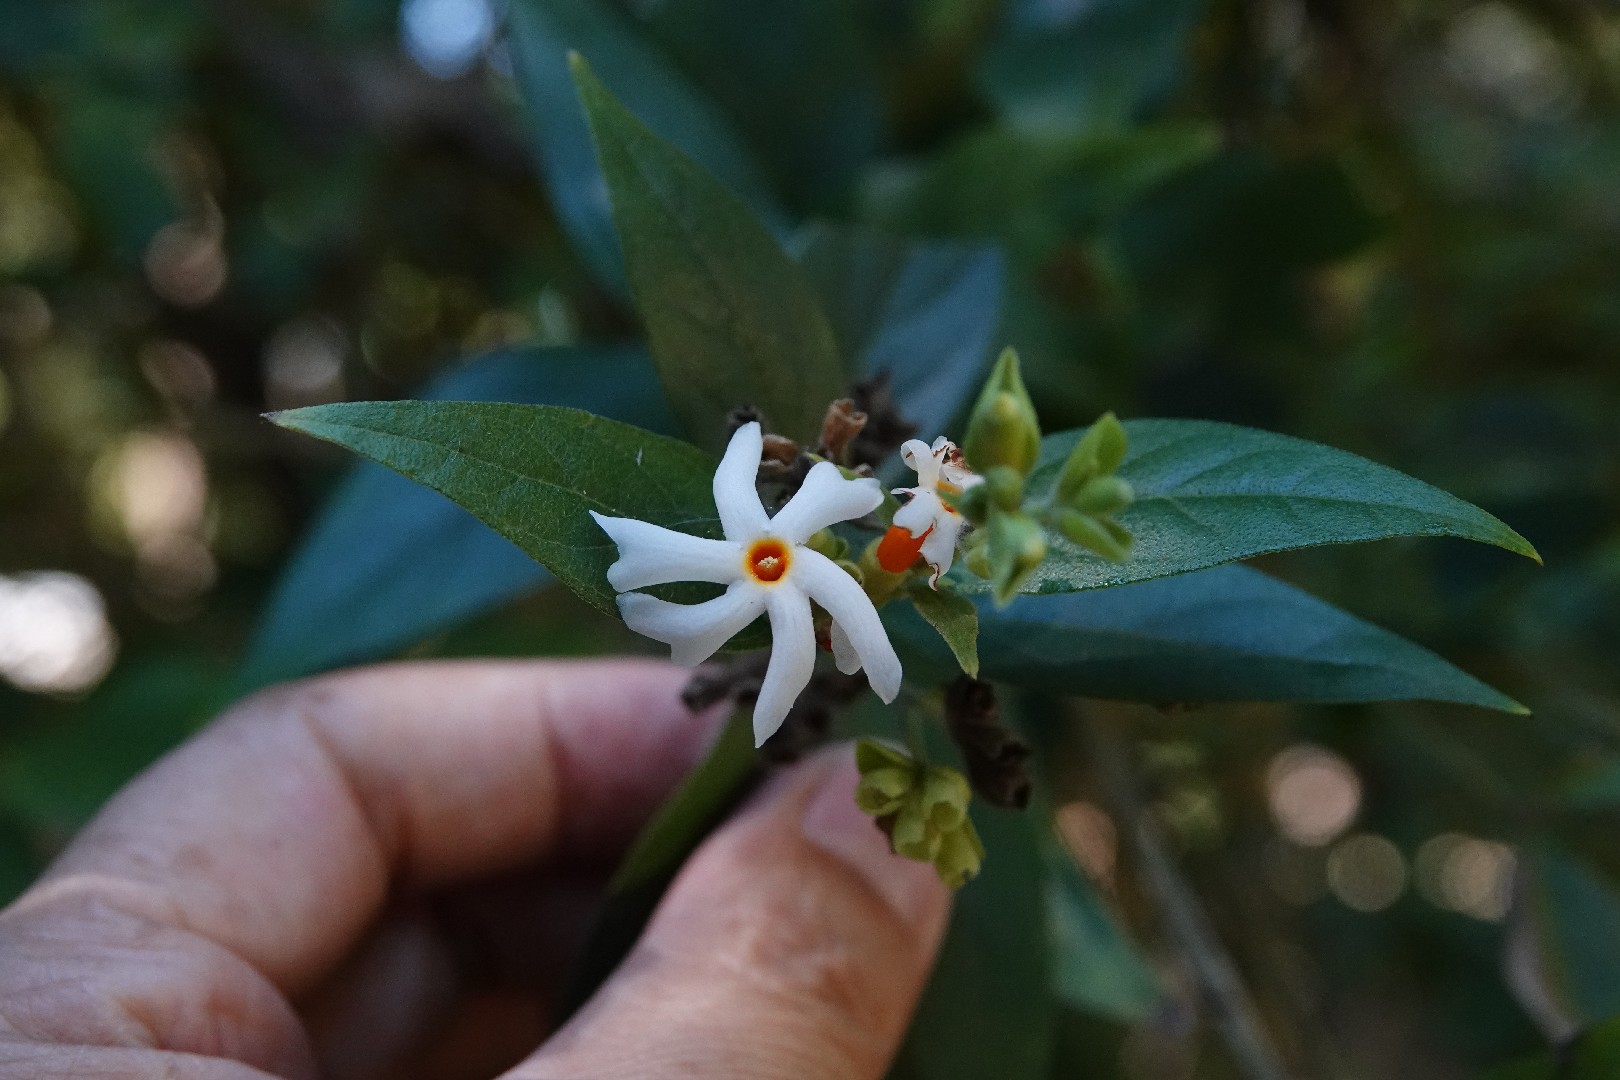 Organic Dried Night Jasmine Flowers Nyctanthes Sepalika Arbor Tristis Tea  Herbal